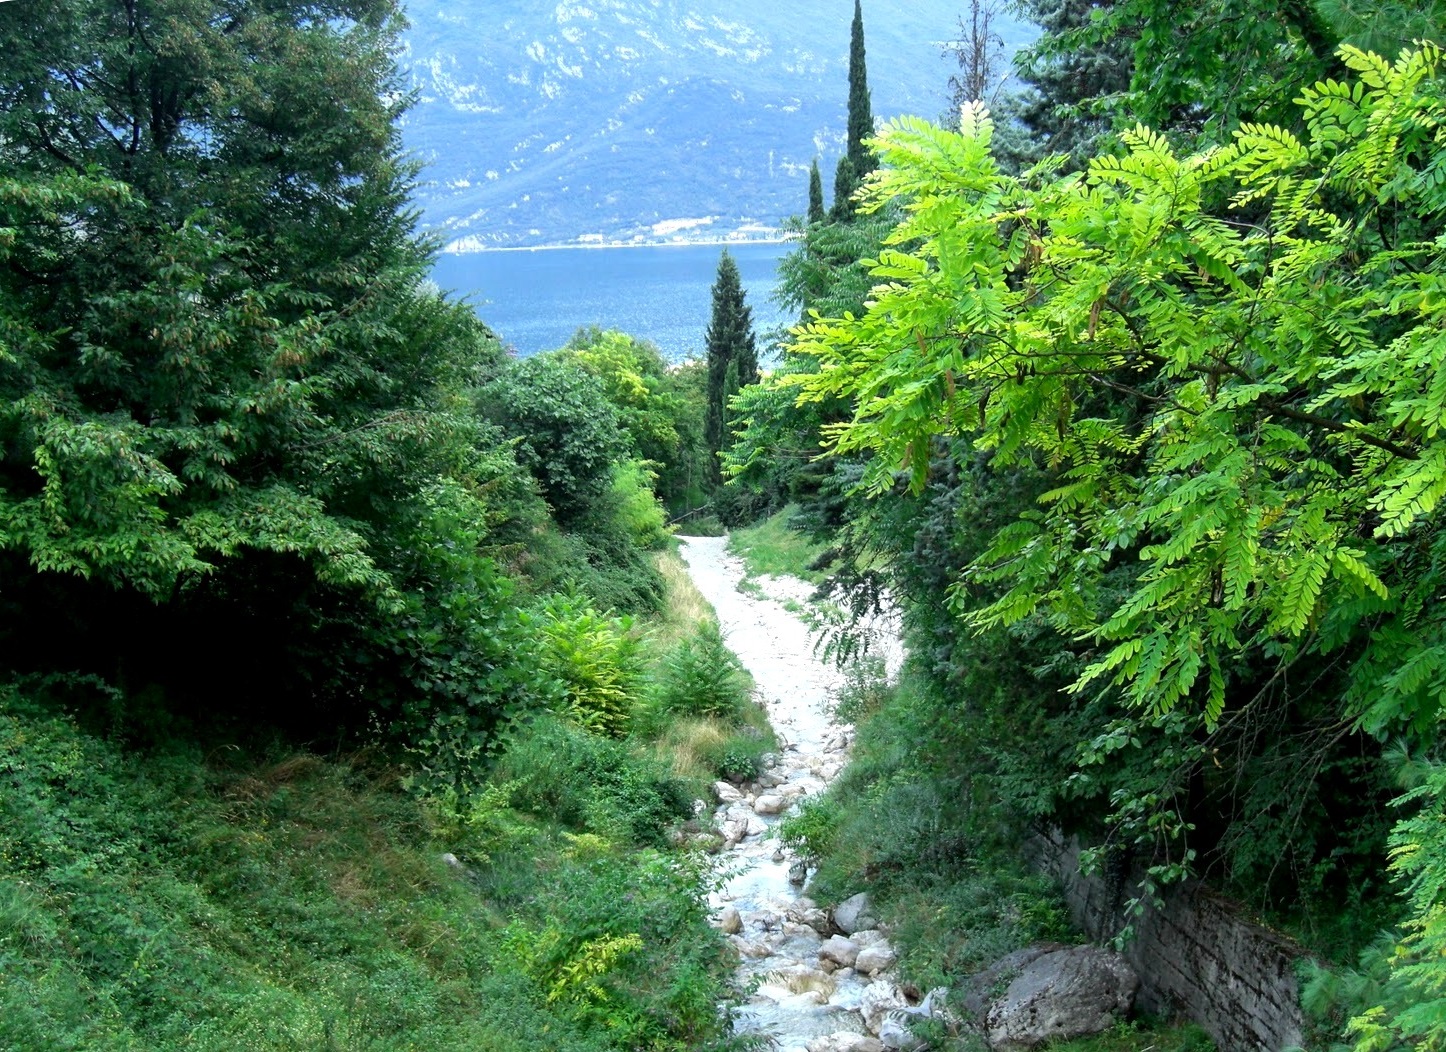 Lago di Garda | www.jclynmtrk.com